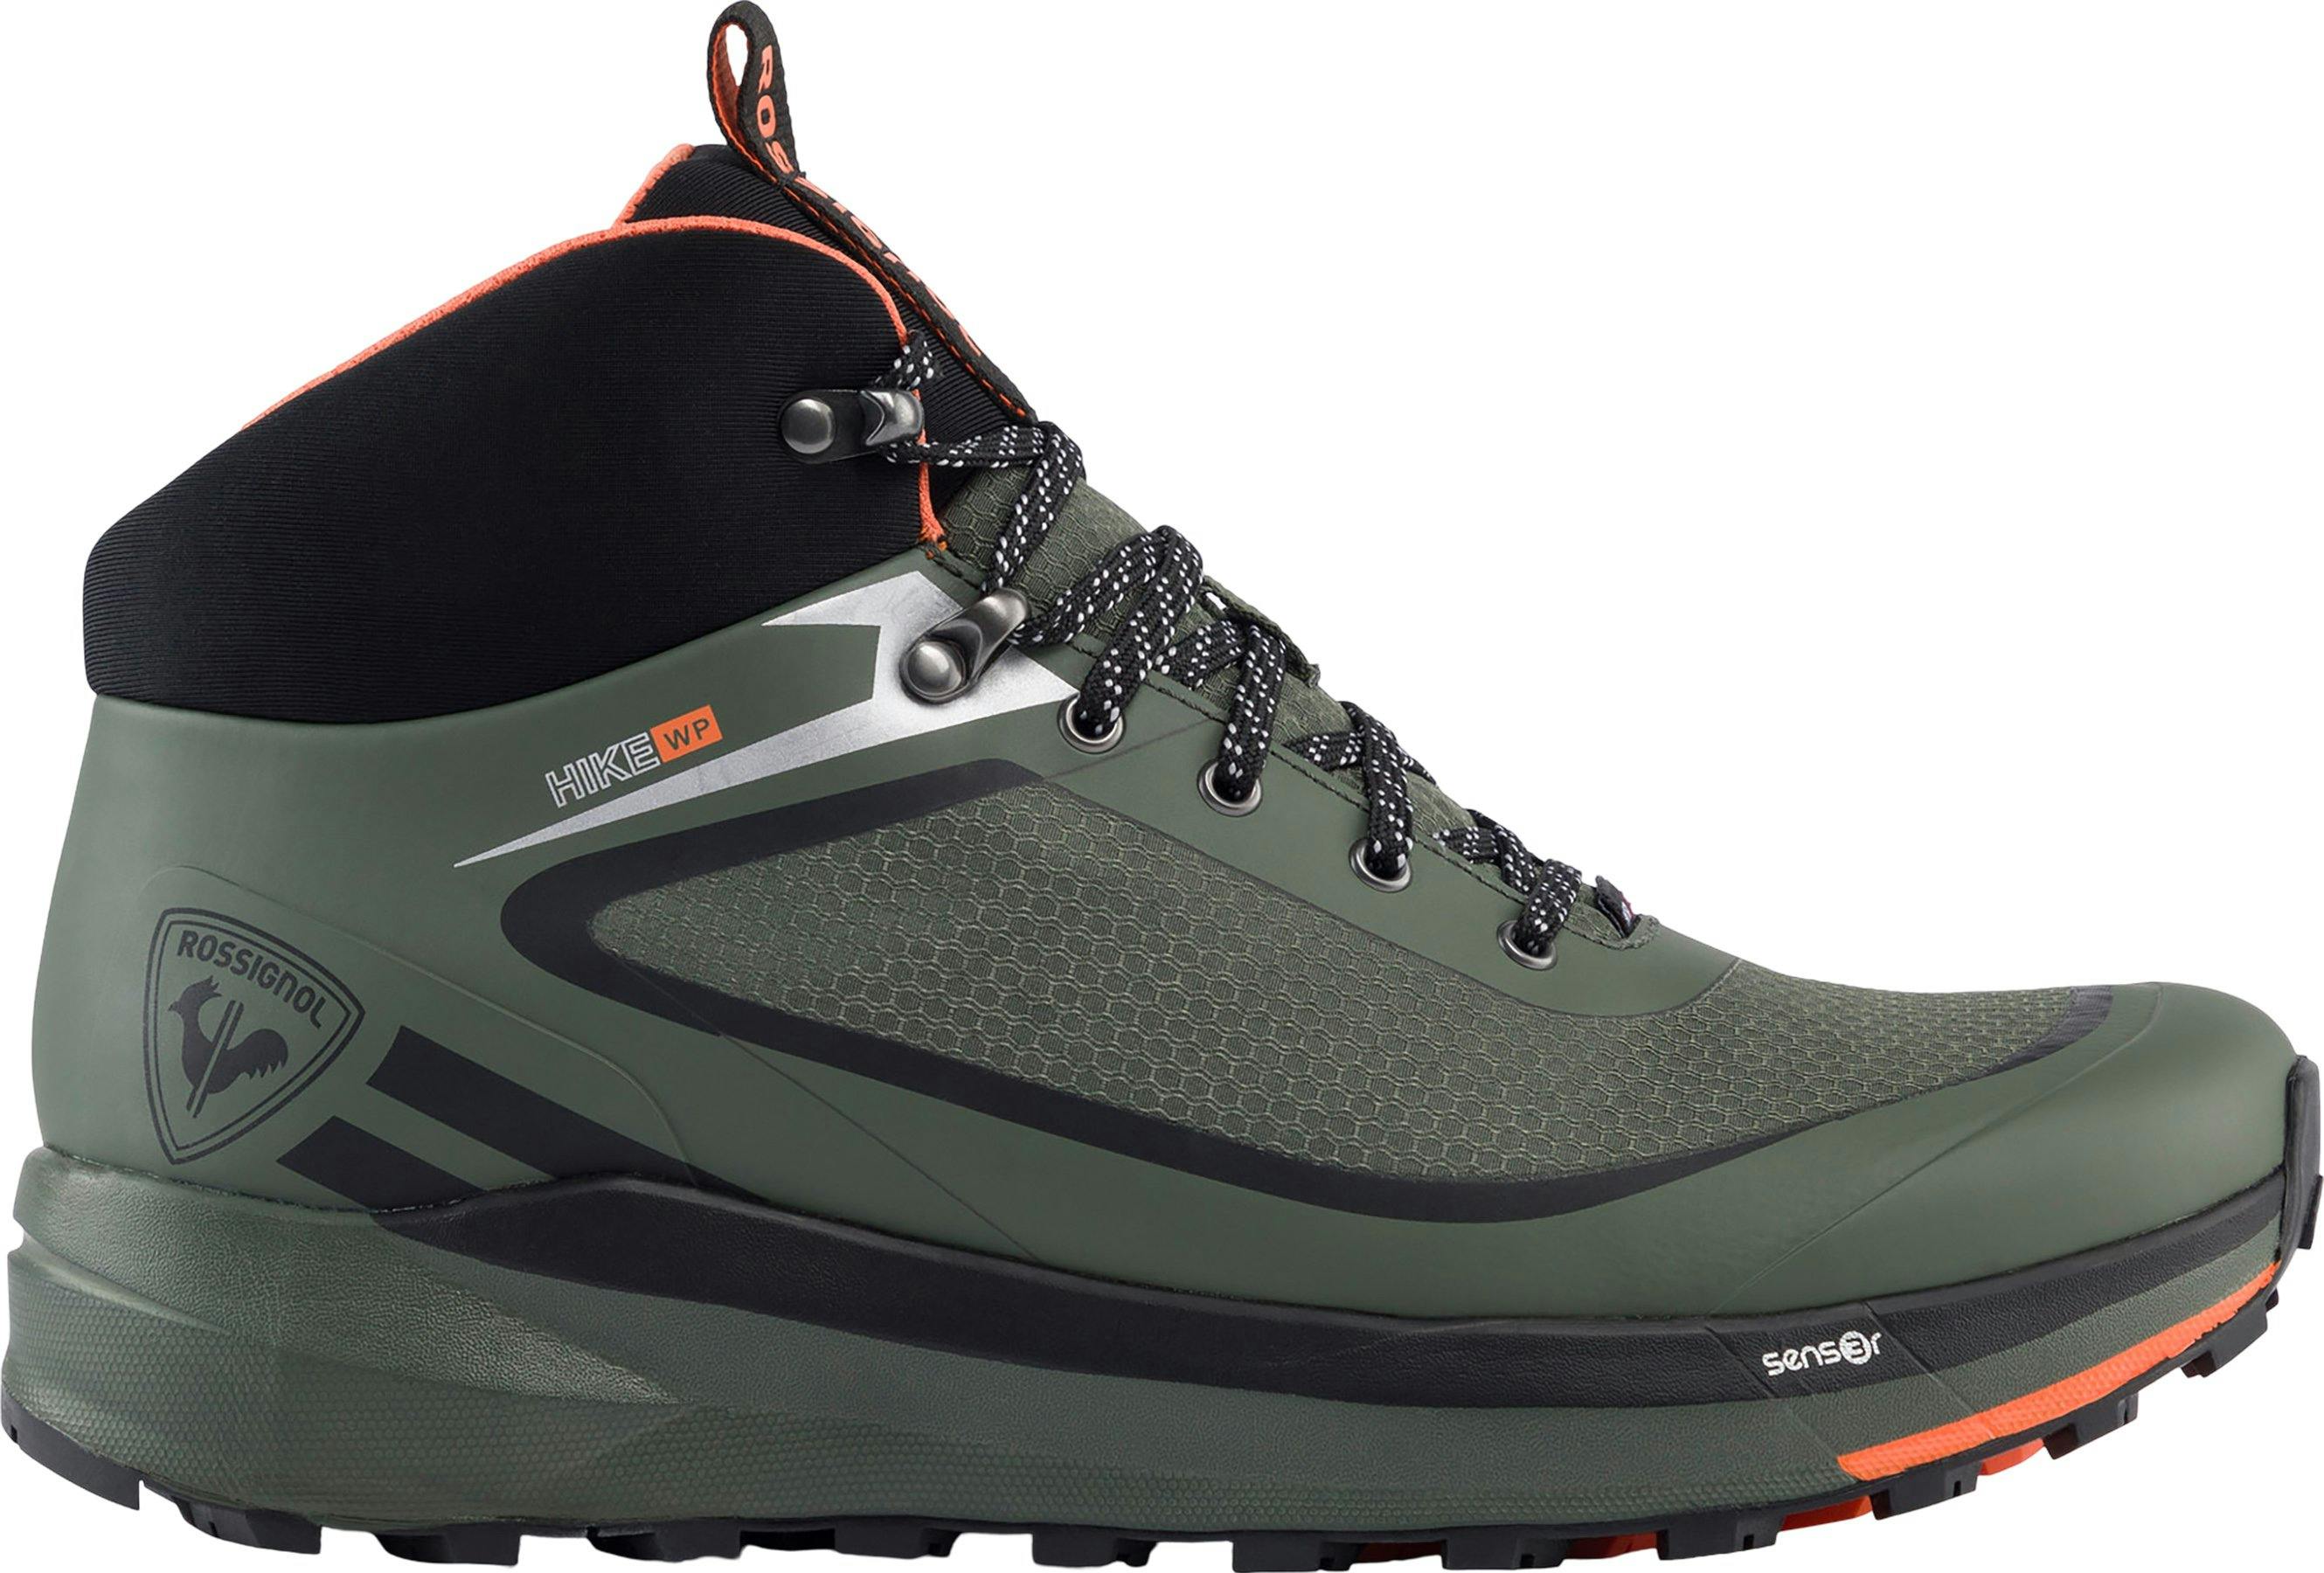 Product image for Skpr Waterproof Hiking Boot - Men's